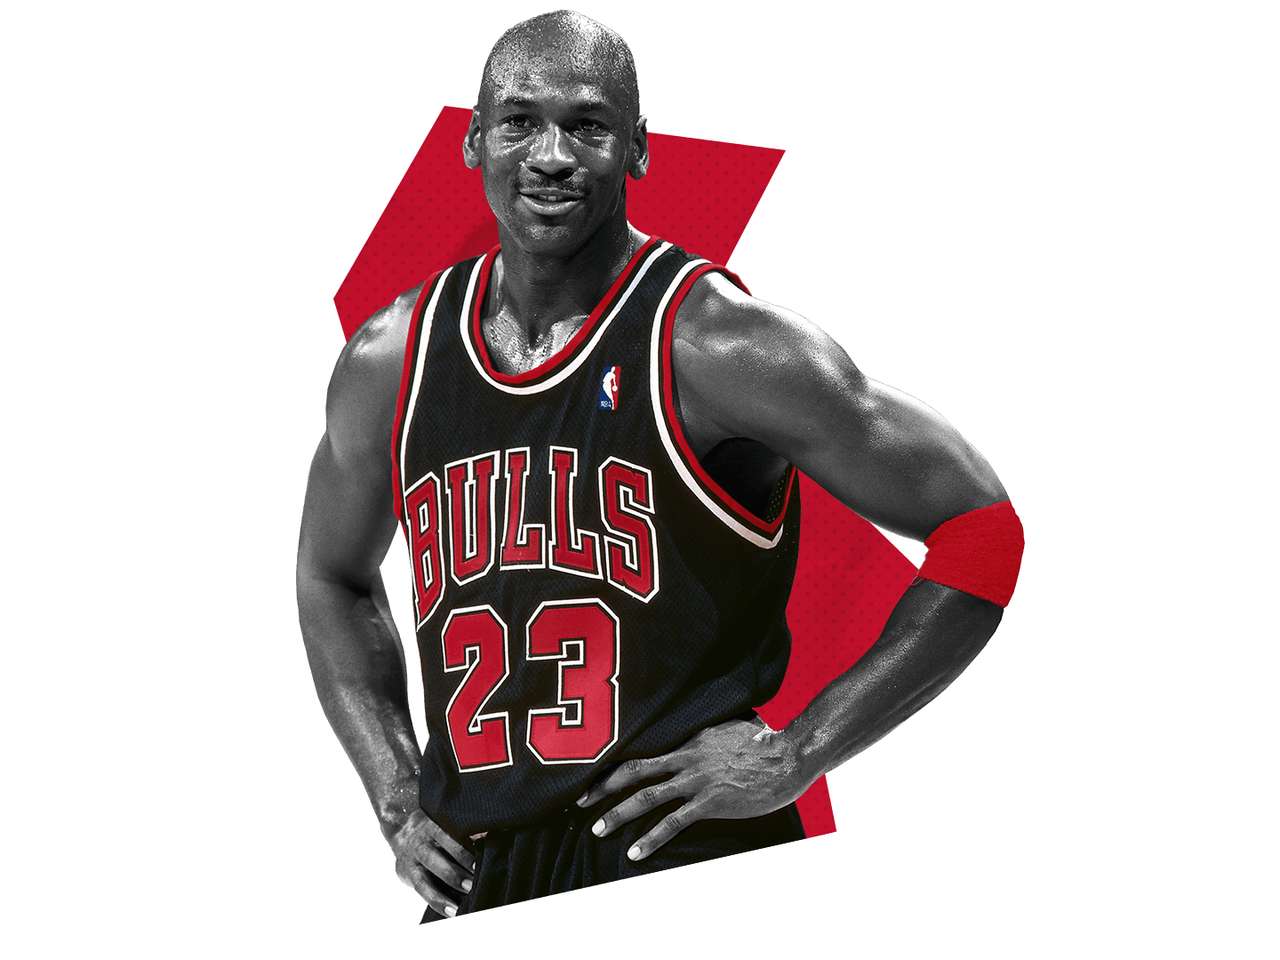 Black History Michael Jordan online puzzle